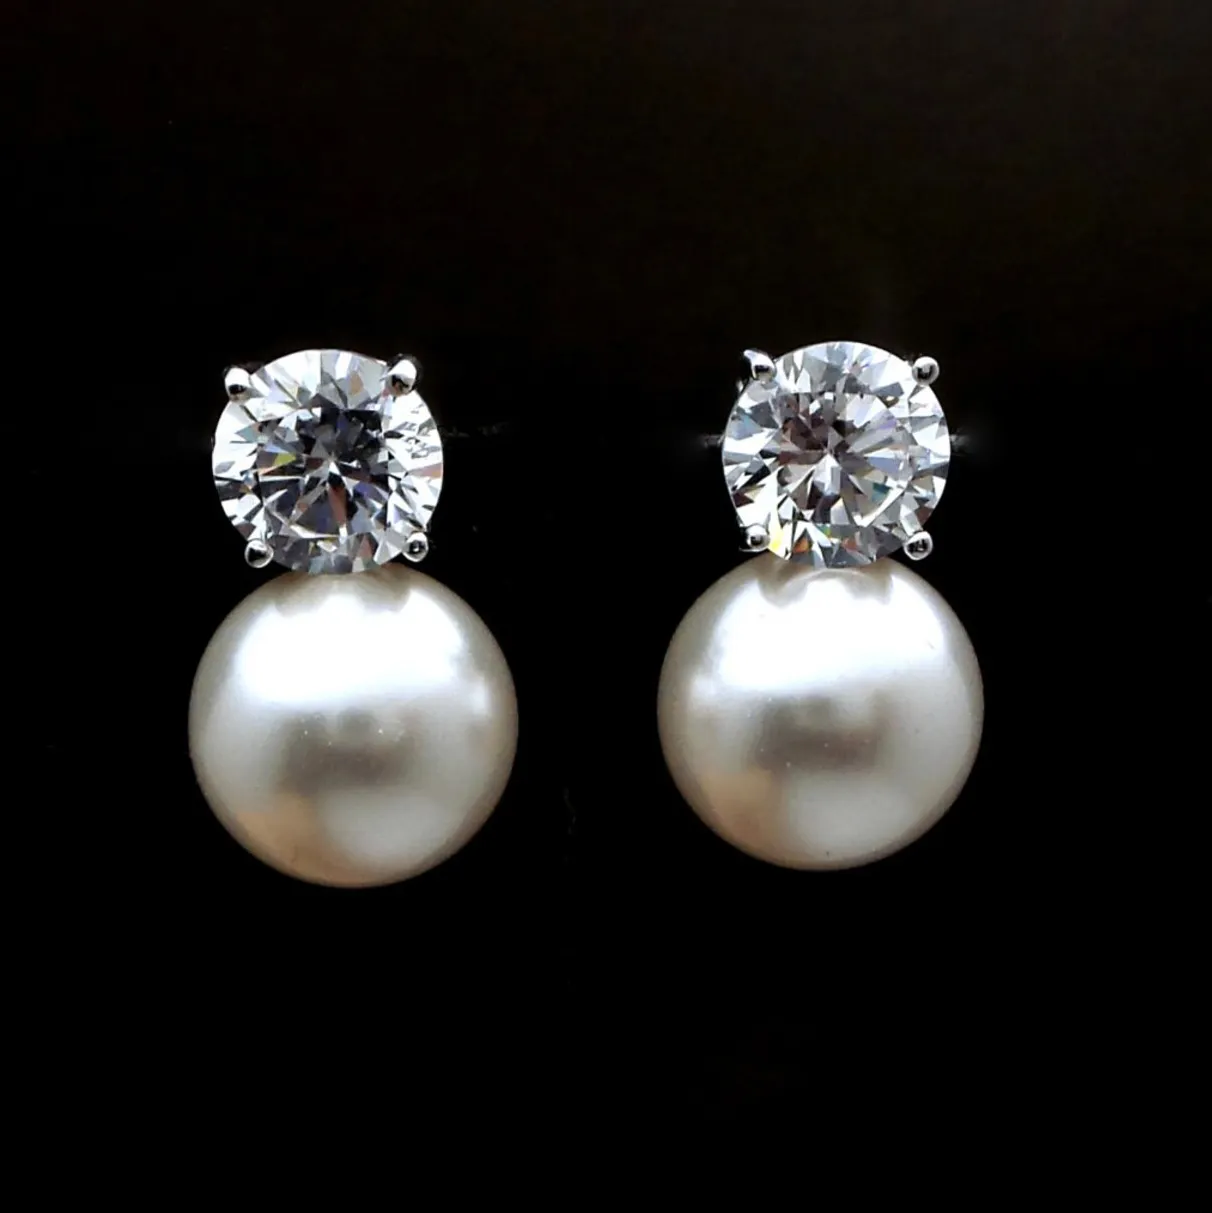 CAOSHI New Arrived Luxury CZ Cubic Zirconia Earrings Stud Jewelry Silver Plated Women Round Freshwater Pearl Drop Earrings